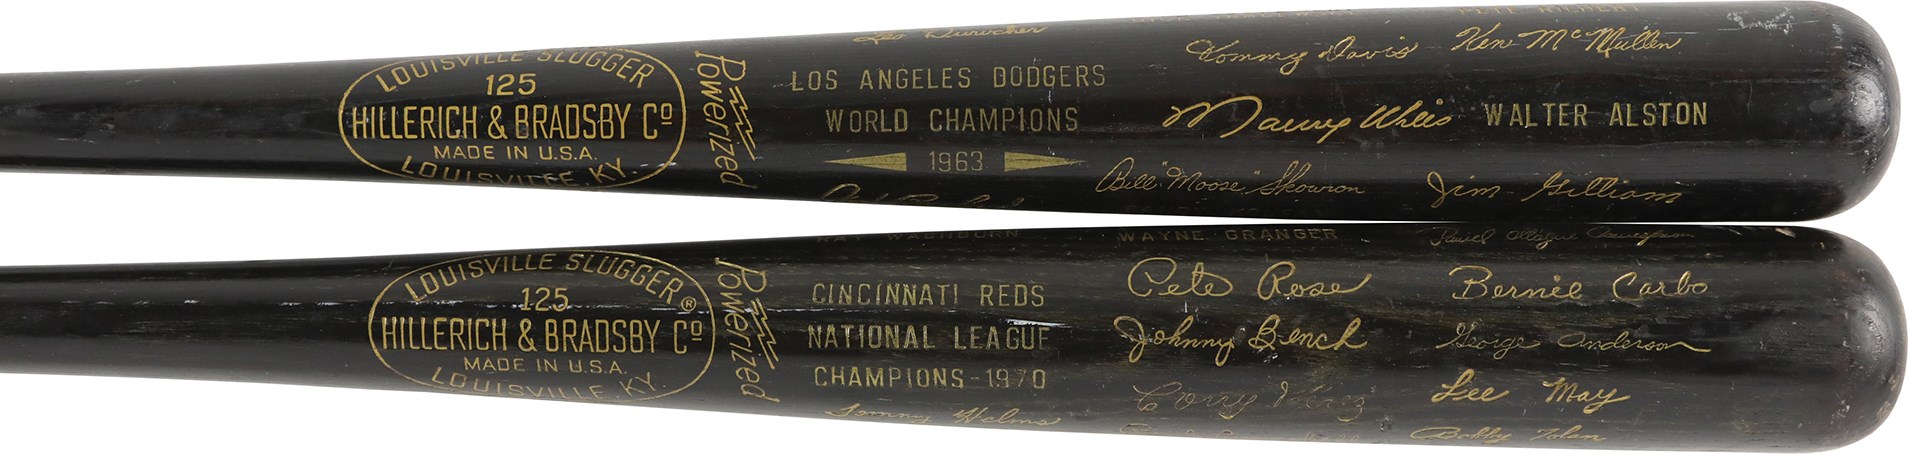 - Pair of H&B Black Bats - 1963 Los Angeles Dodgers & 1970 Cincinnati Reds